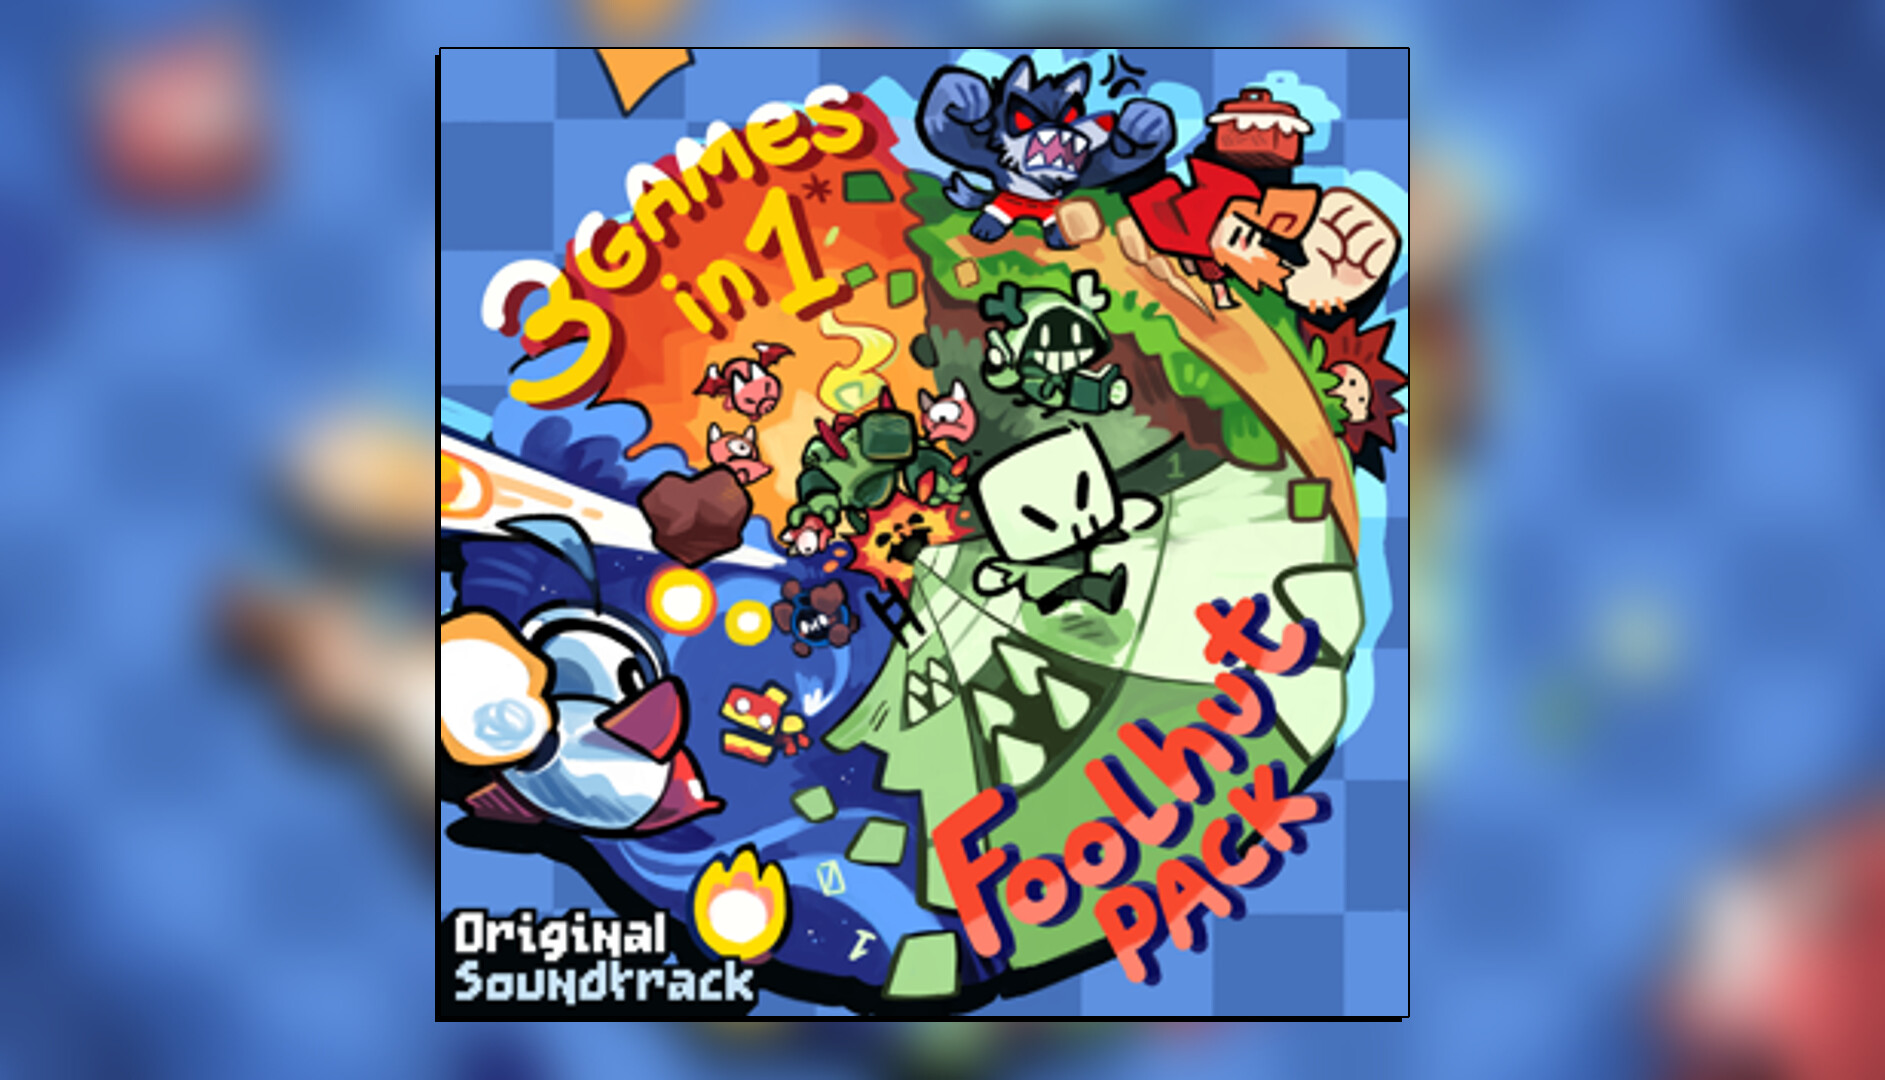 FoolHut Pack - Soundtrack Featured Screenshot #1